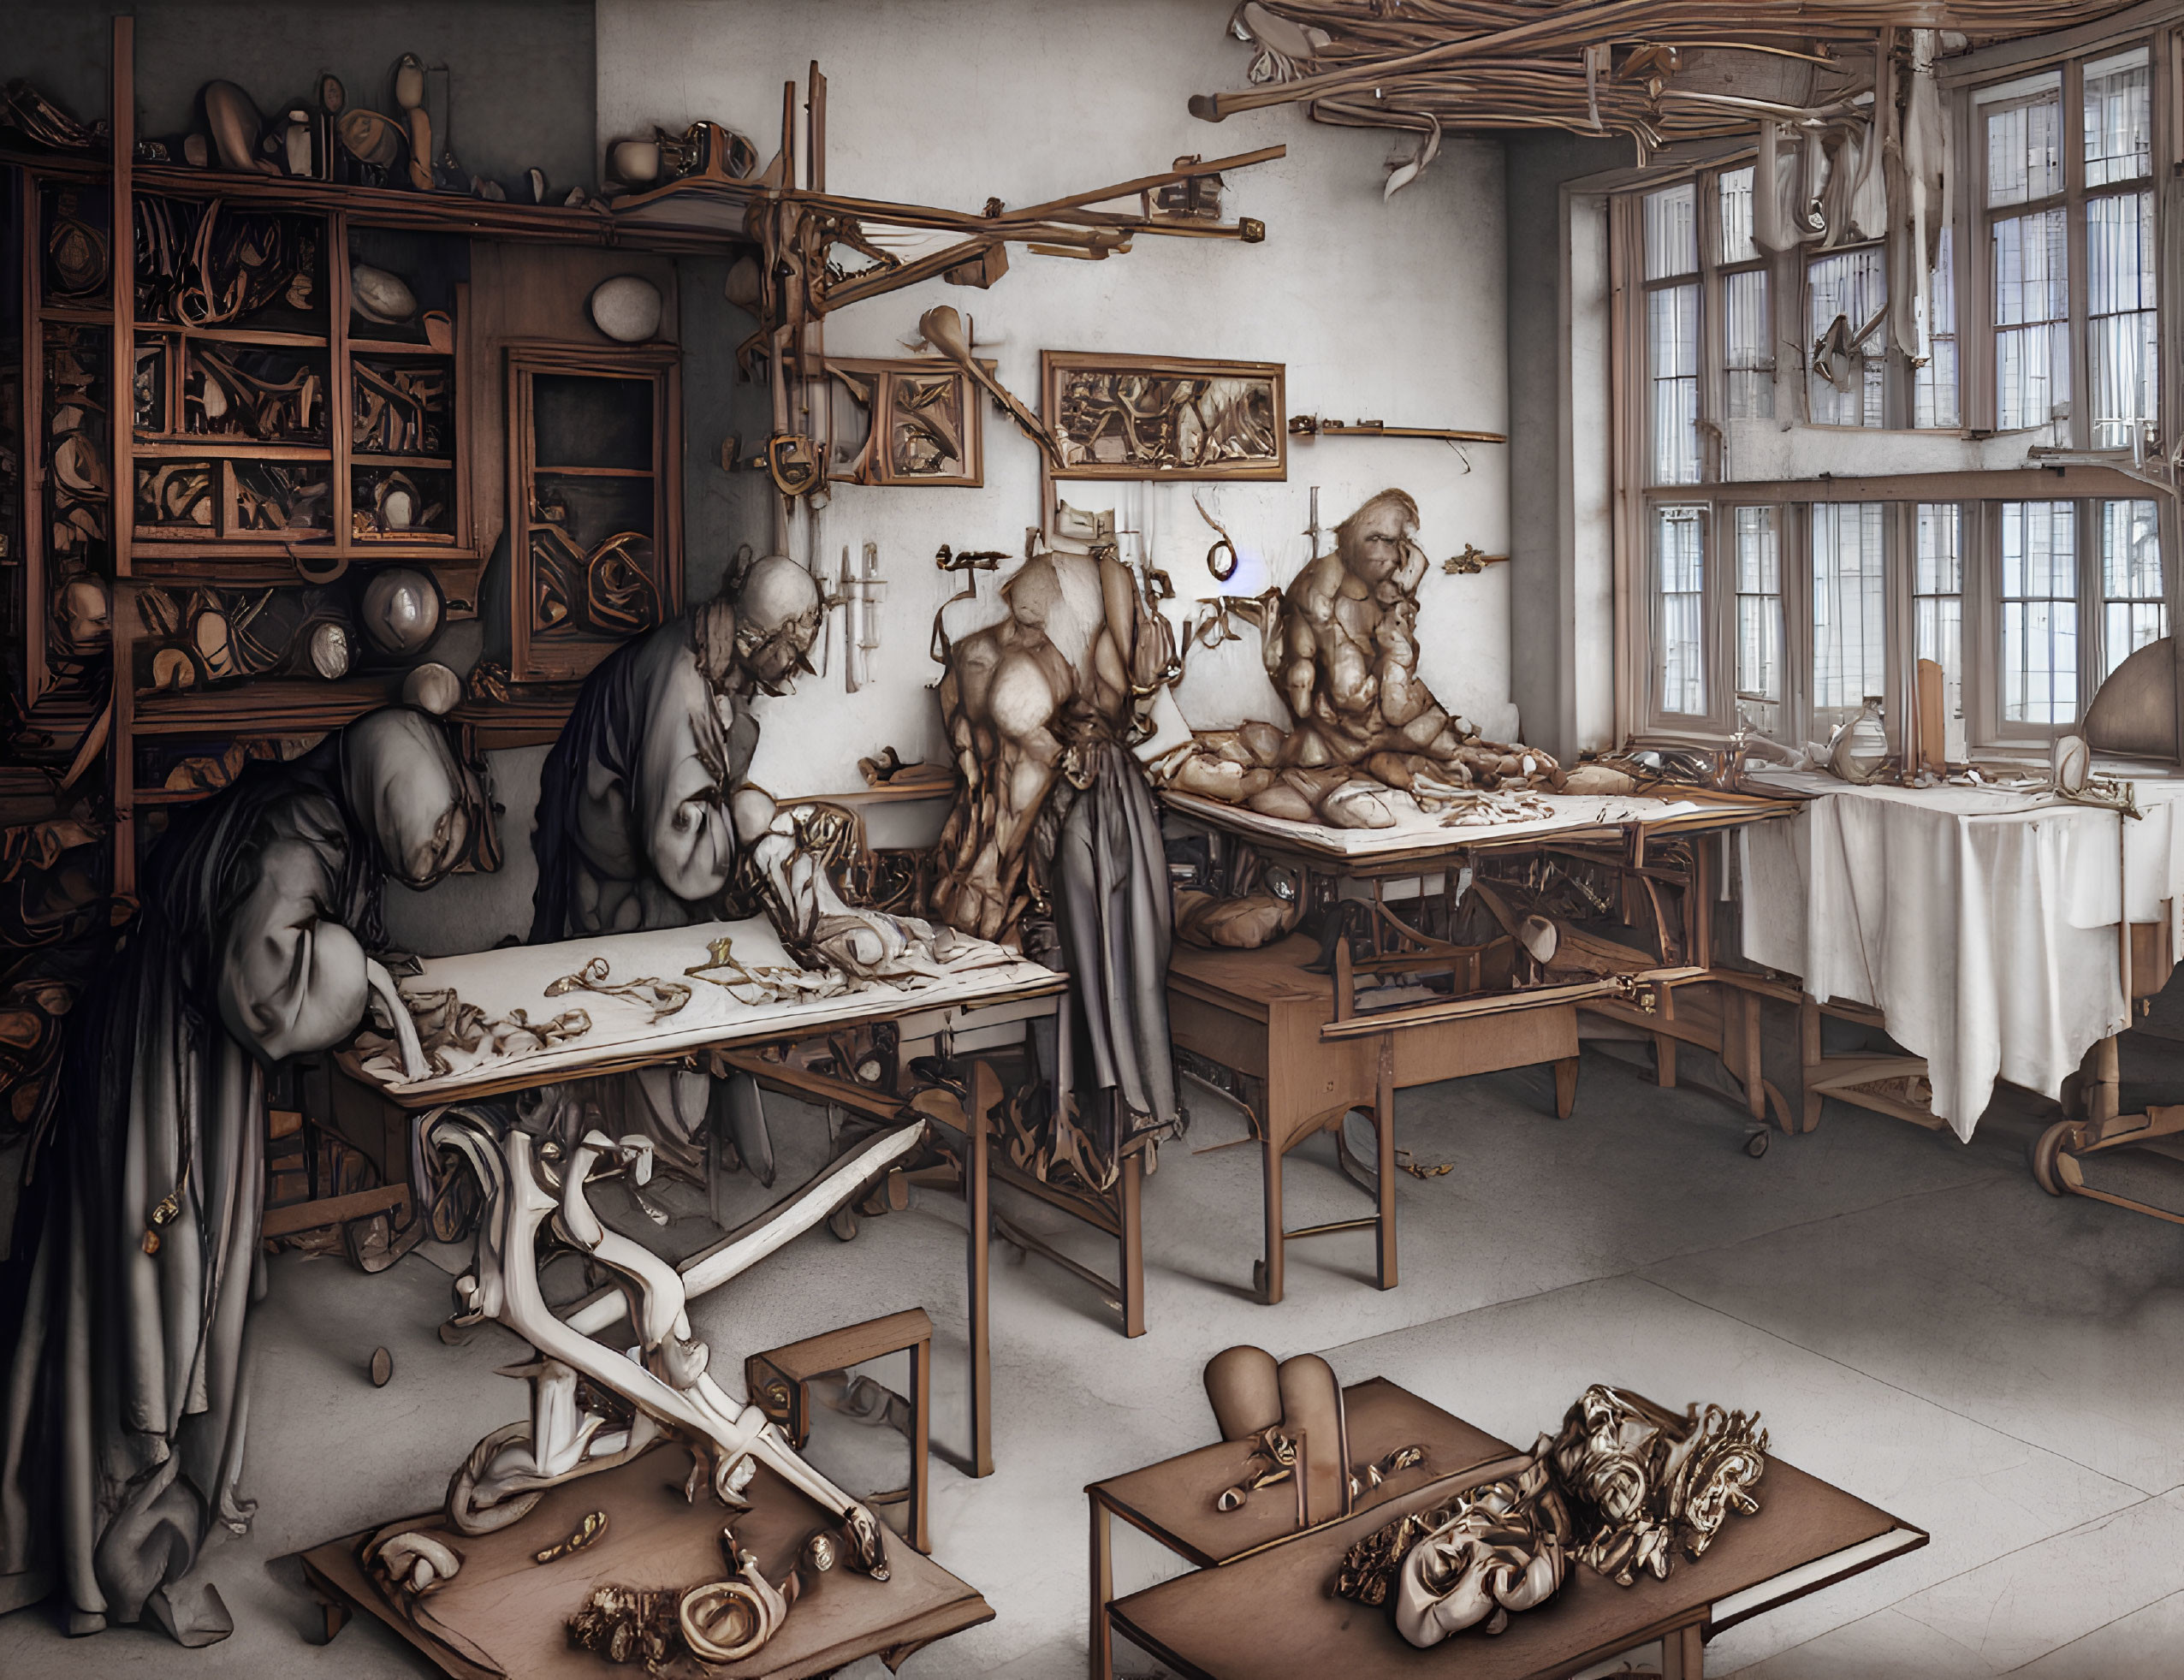 Detailed Workshop Illustration: Four Anthropomorphic Figures Crafting Wooden Mechanisms